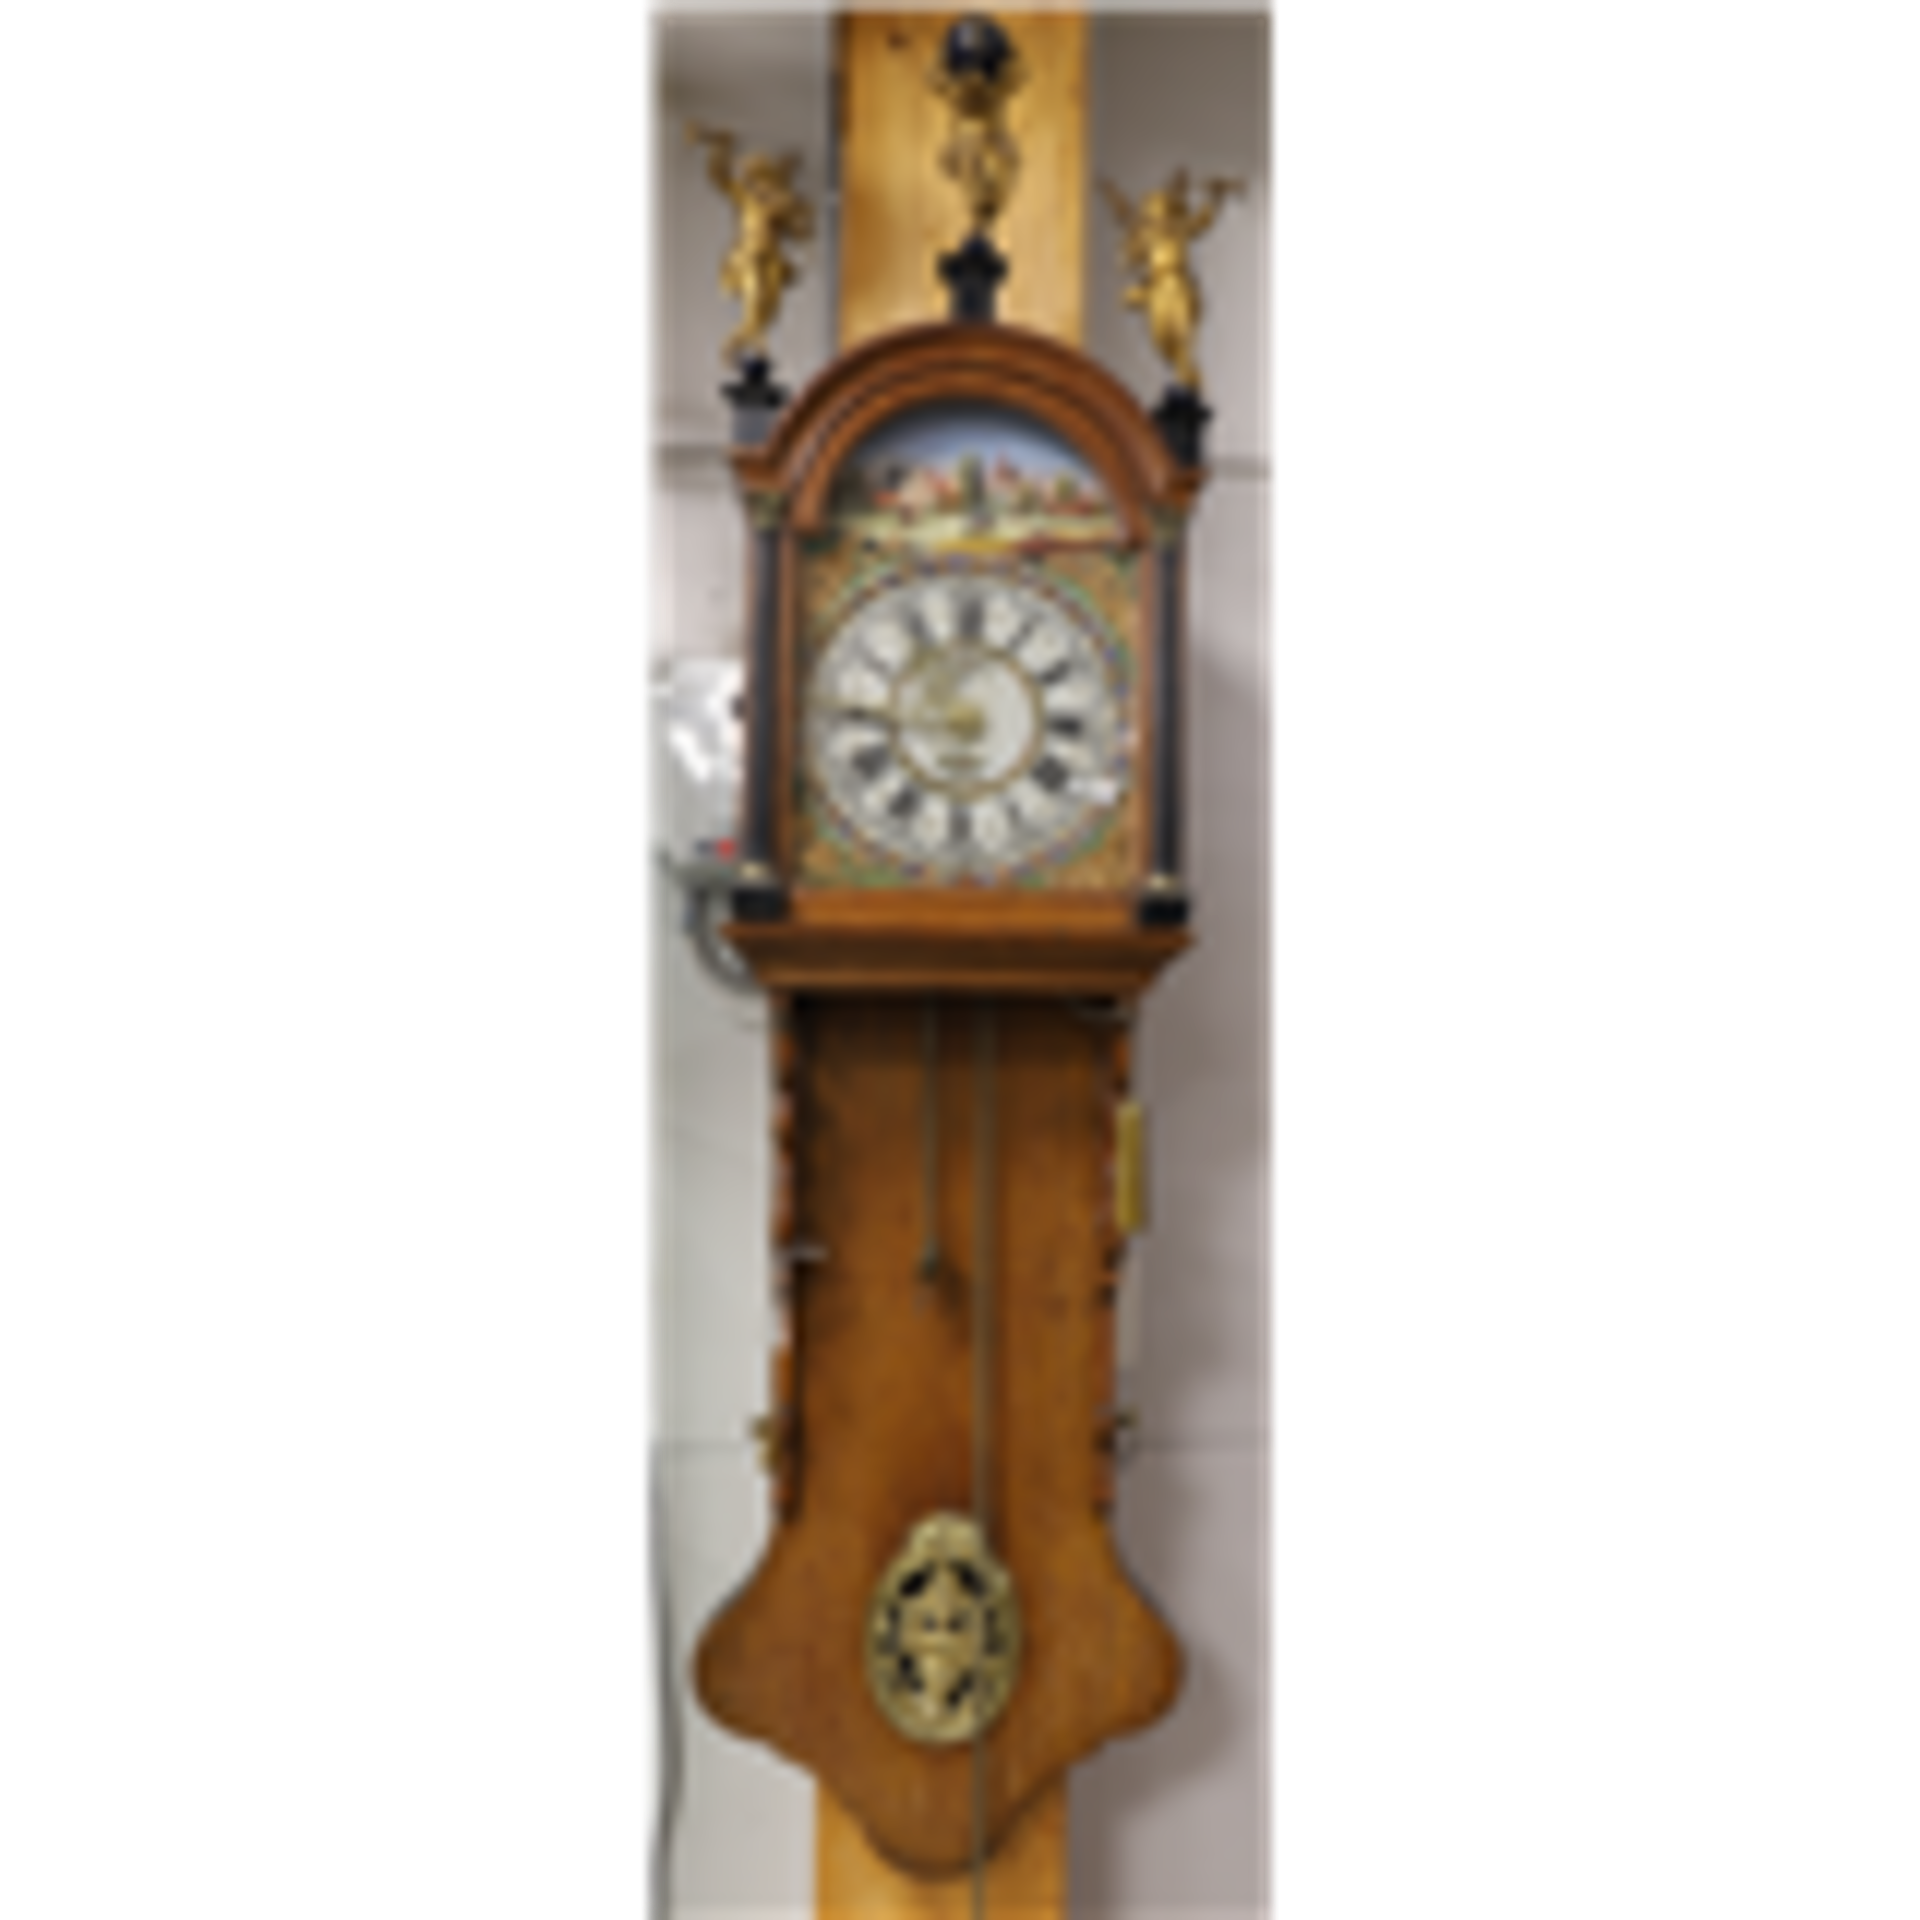 A Frisian tail clock, Friesland, mid 19th century.